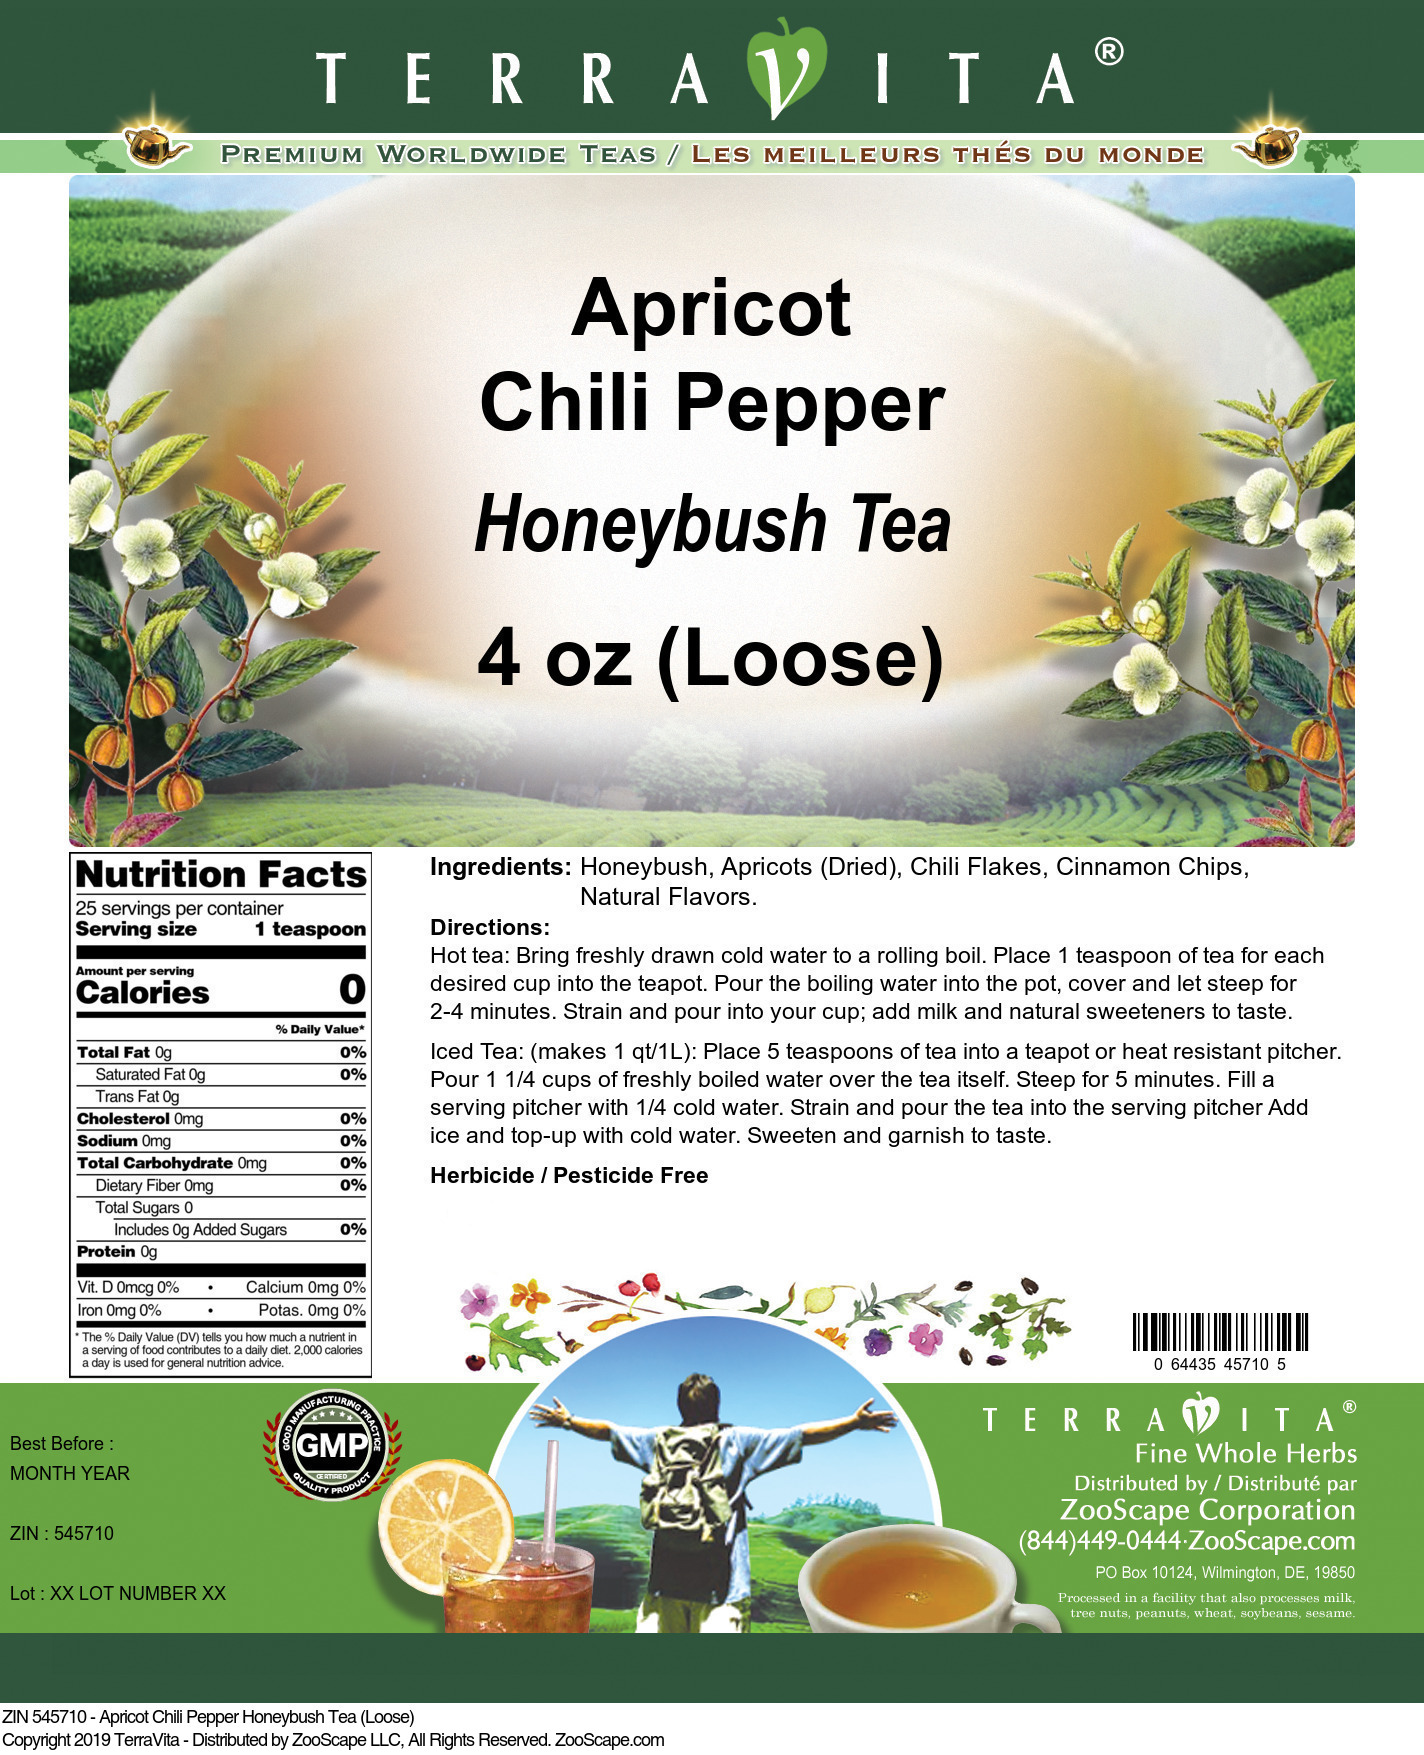 Apricot Chili Pepper Honeybush Tea (Loose) - Label